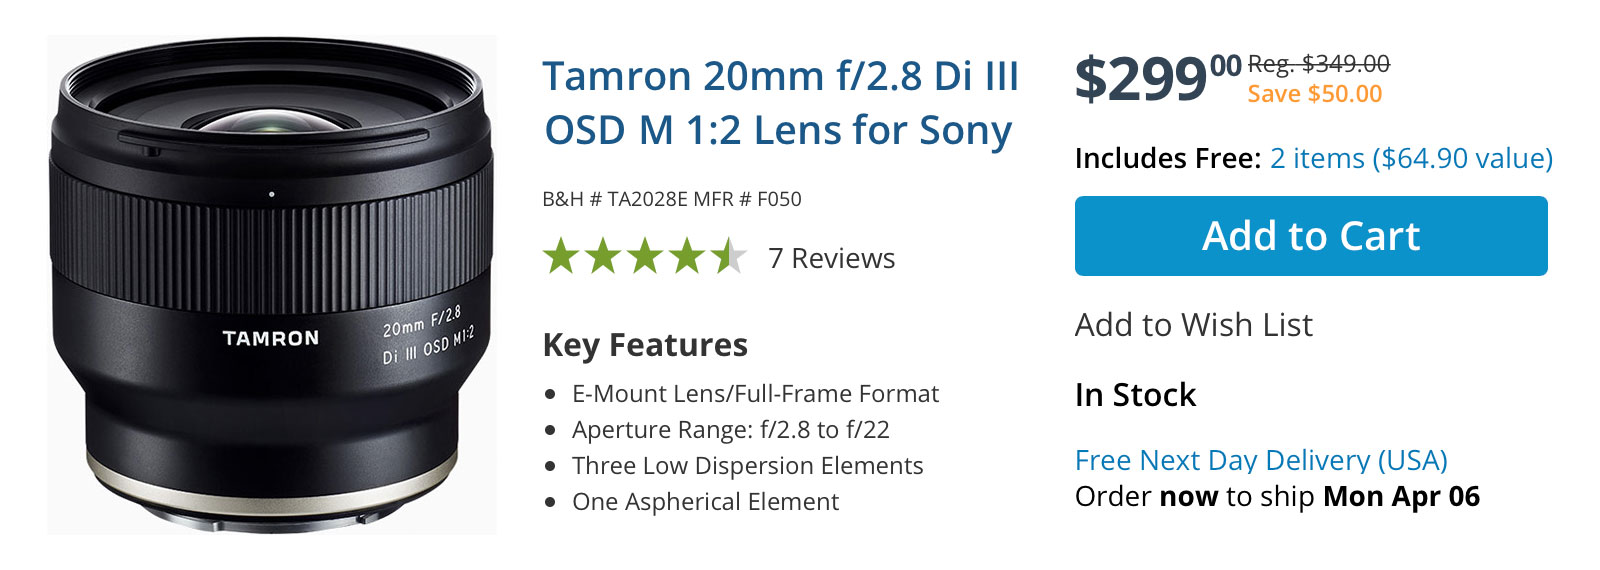 Save $50 on Tamron FE 20mm Prime Lens